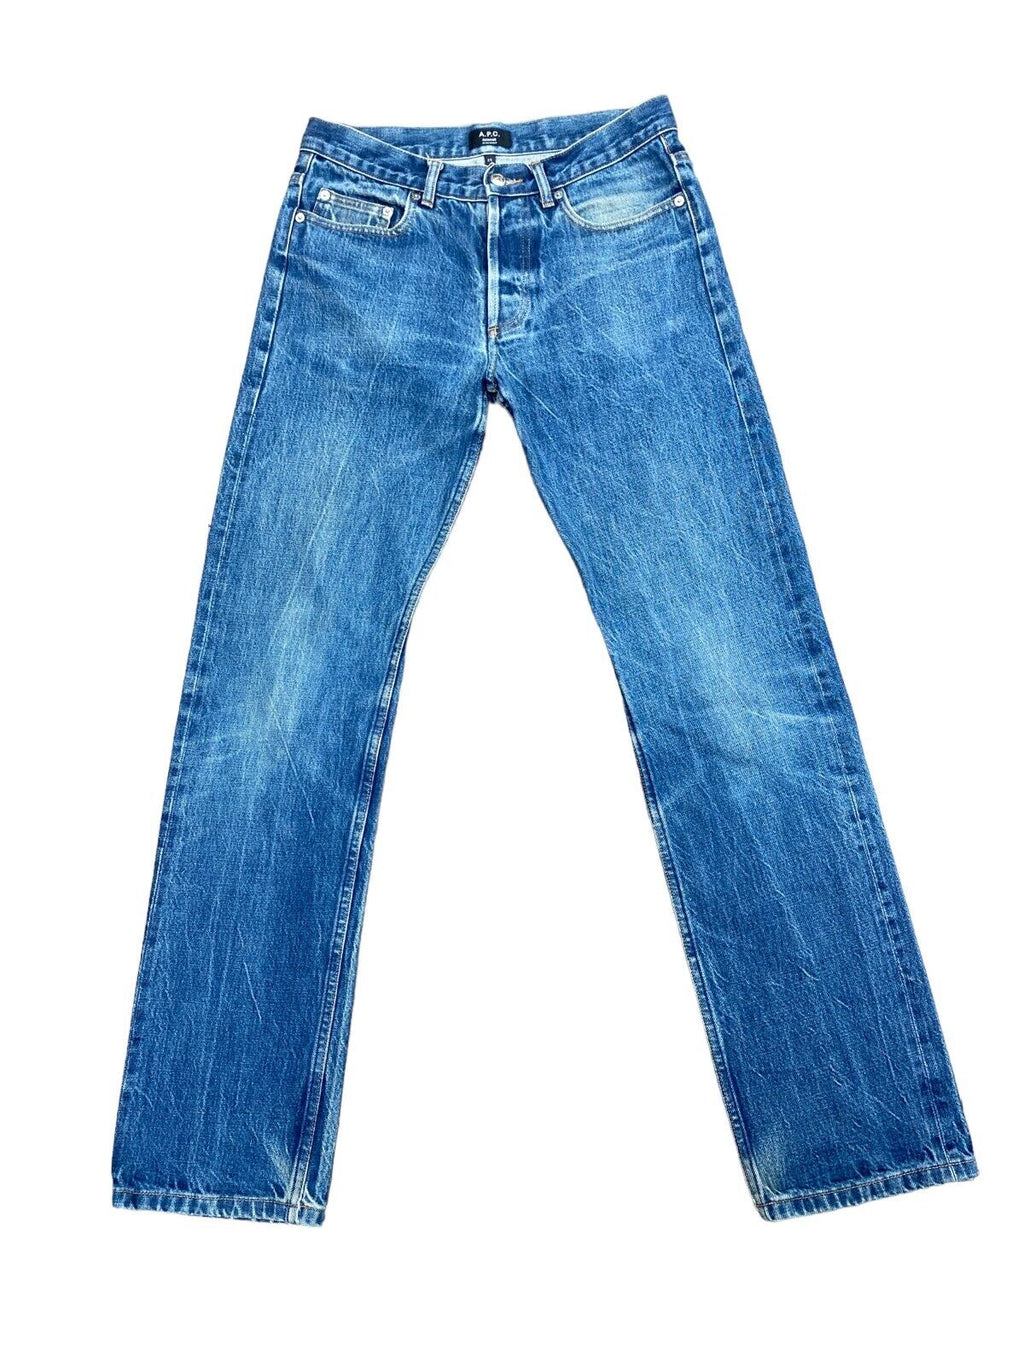 Butler Denim Jeans  Recue  Straight Fit  Size 29 APC